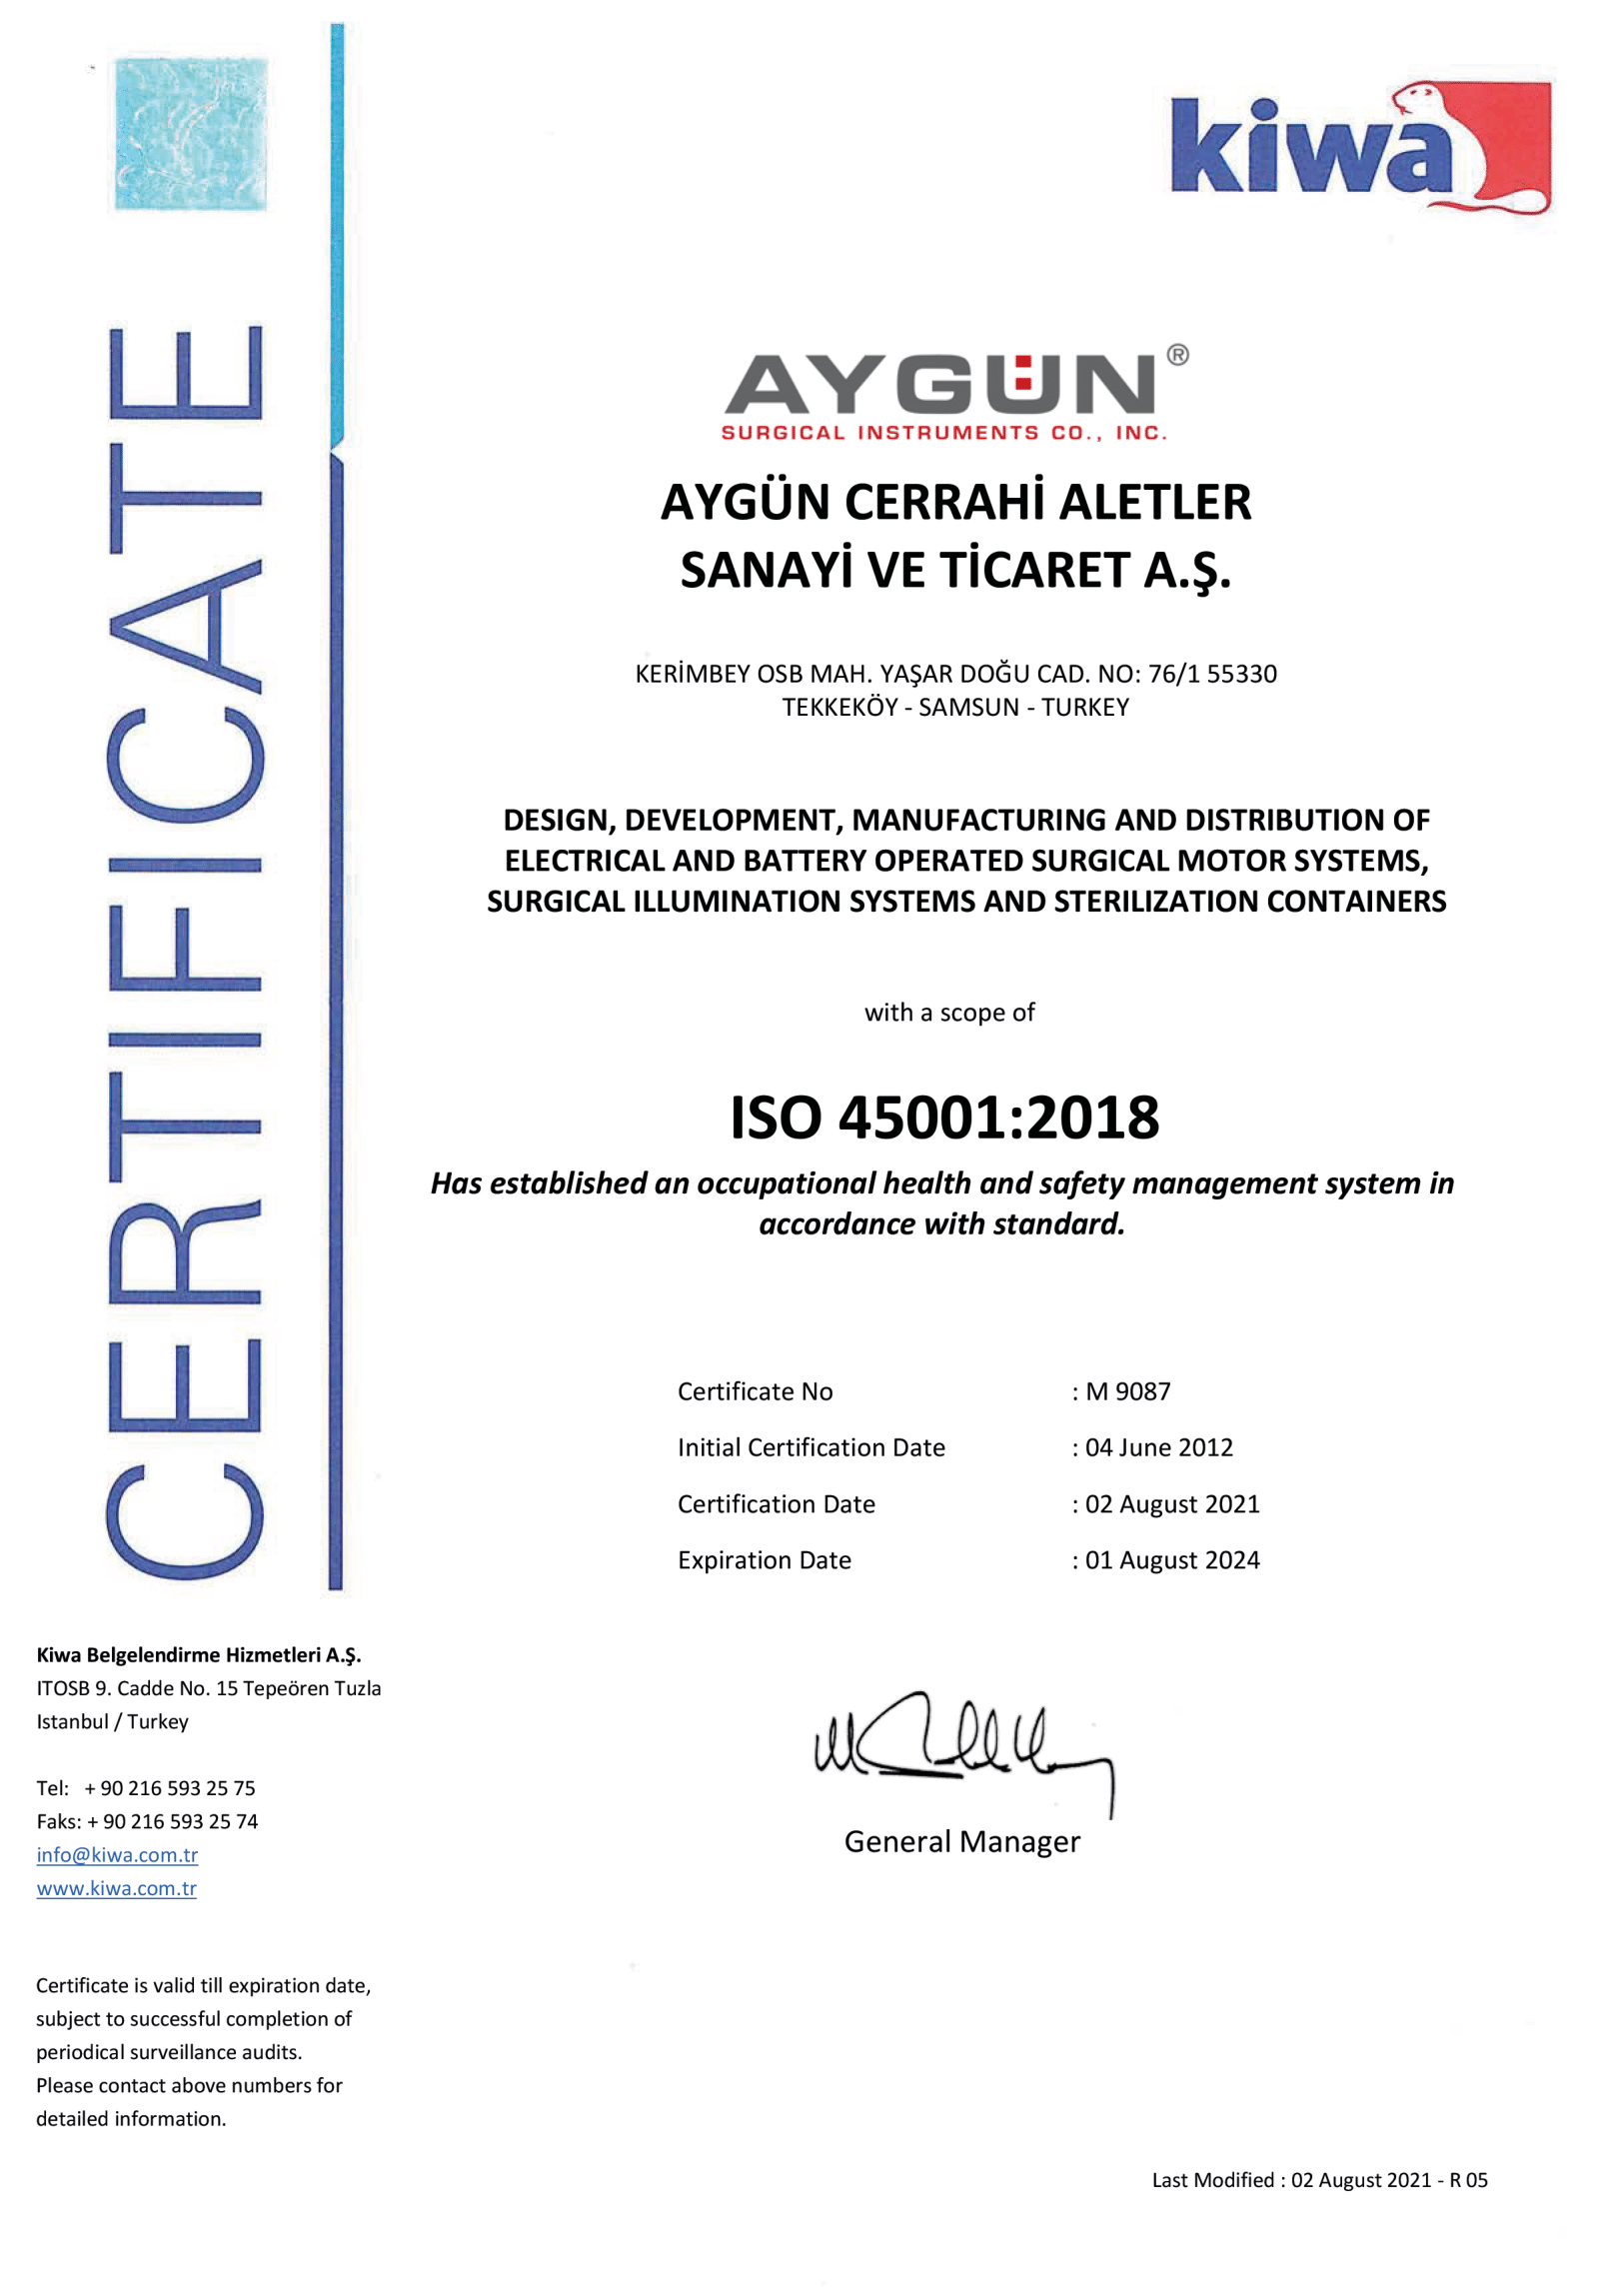 Aygün Certificate